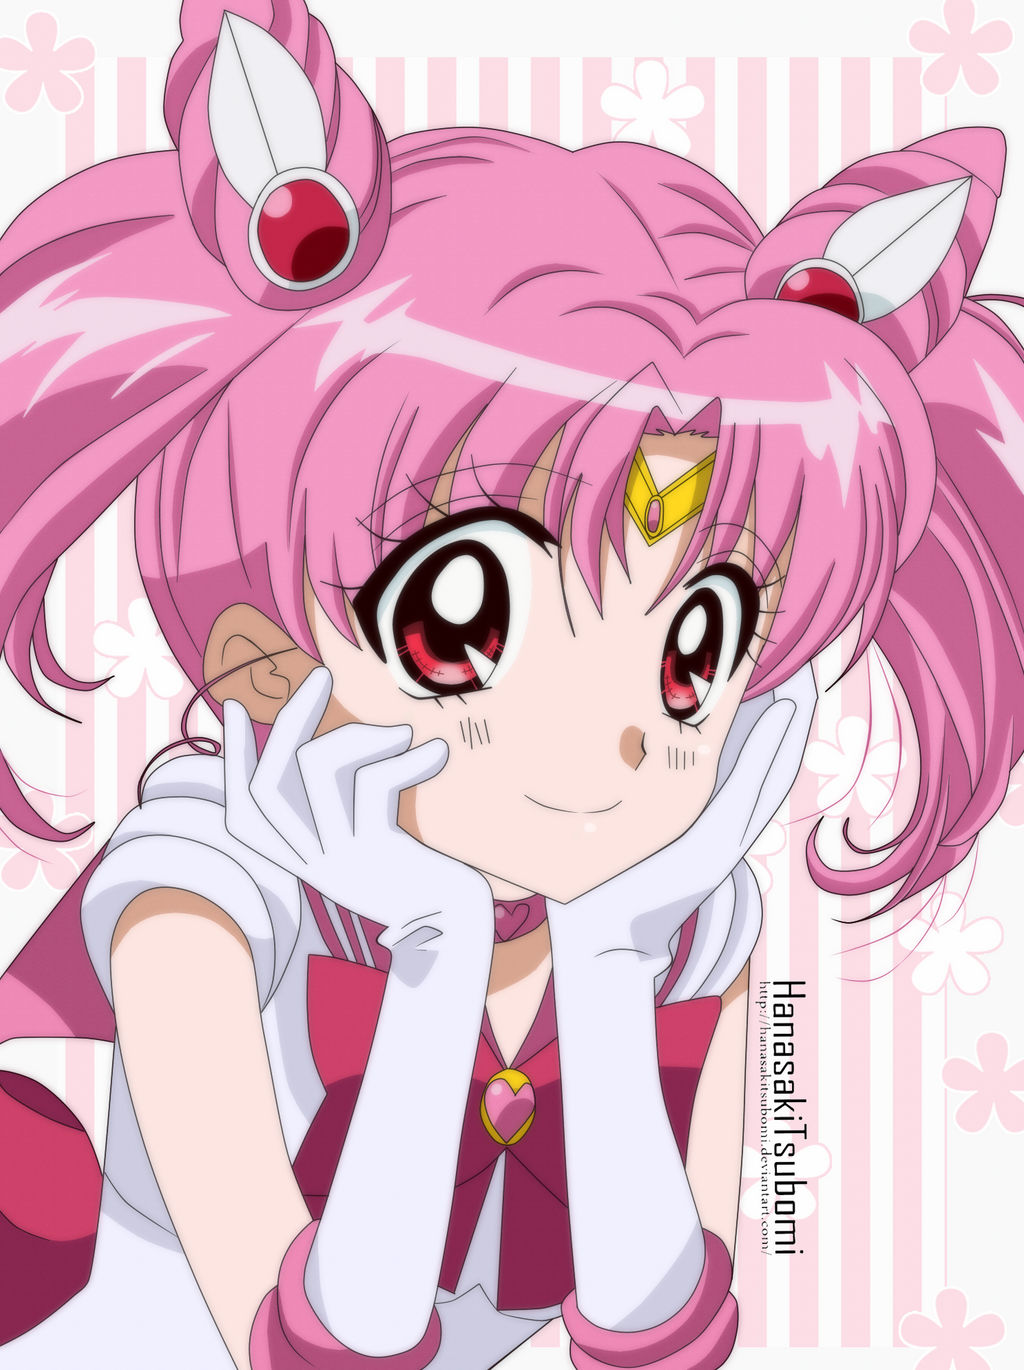 Sailor Chibi Moon -Arina Tanemura version-